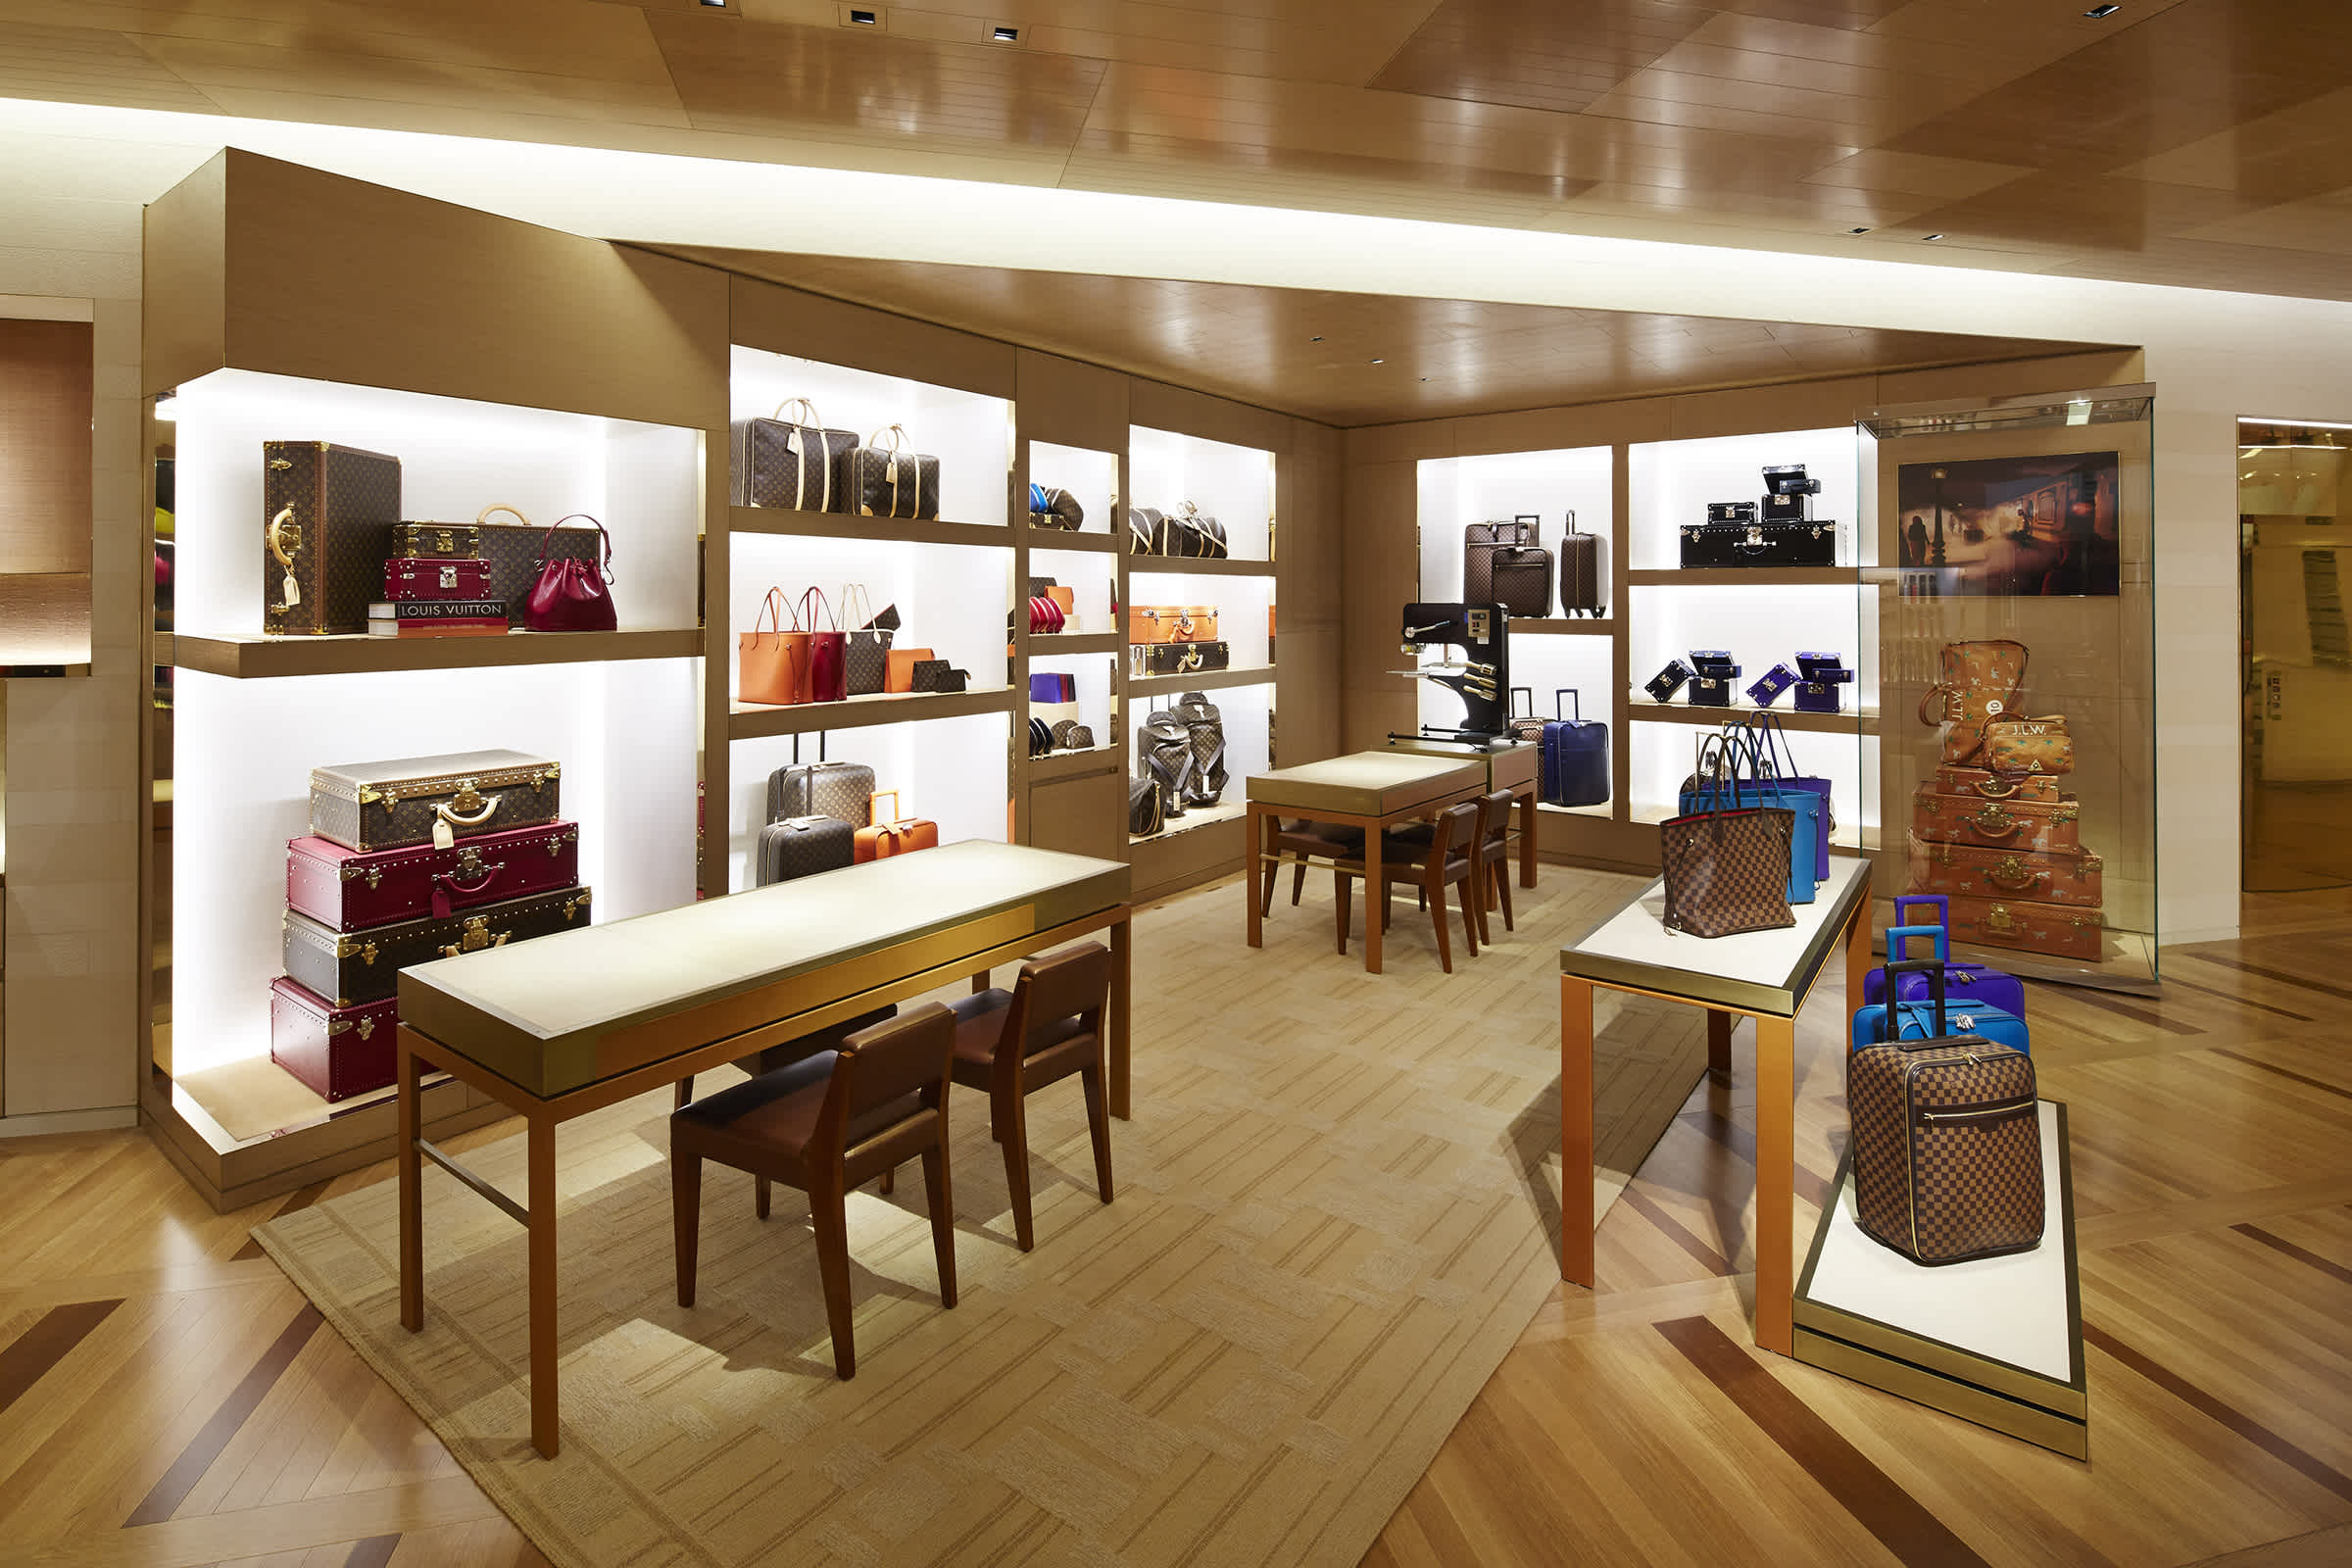 Louis Vuitton American Store